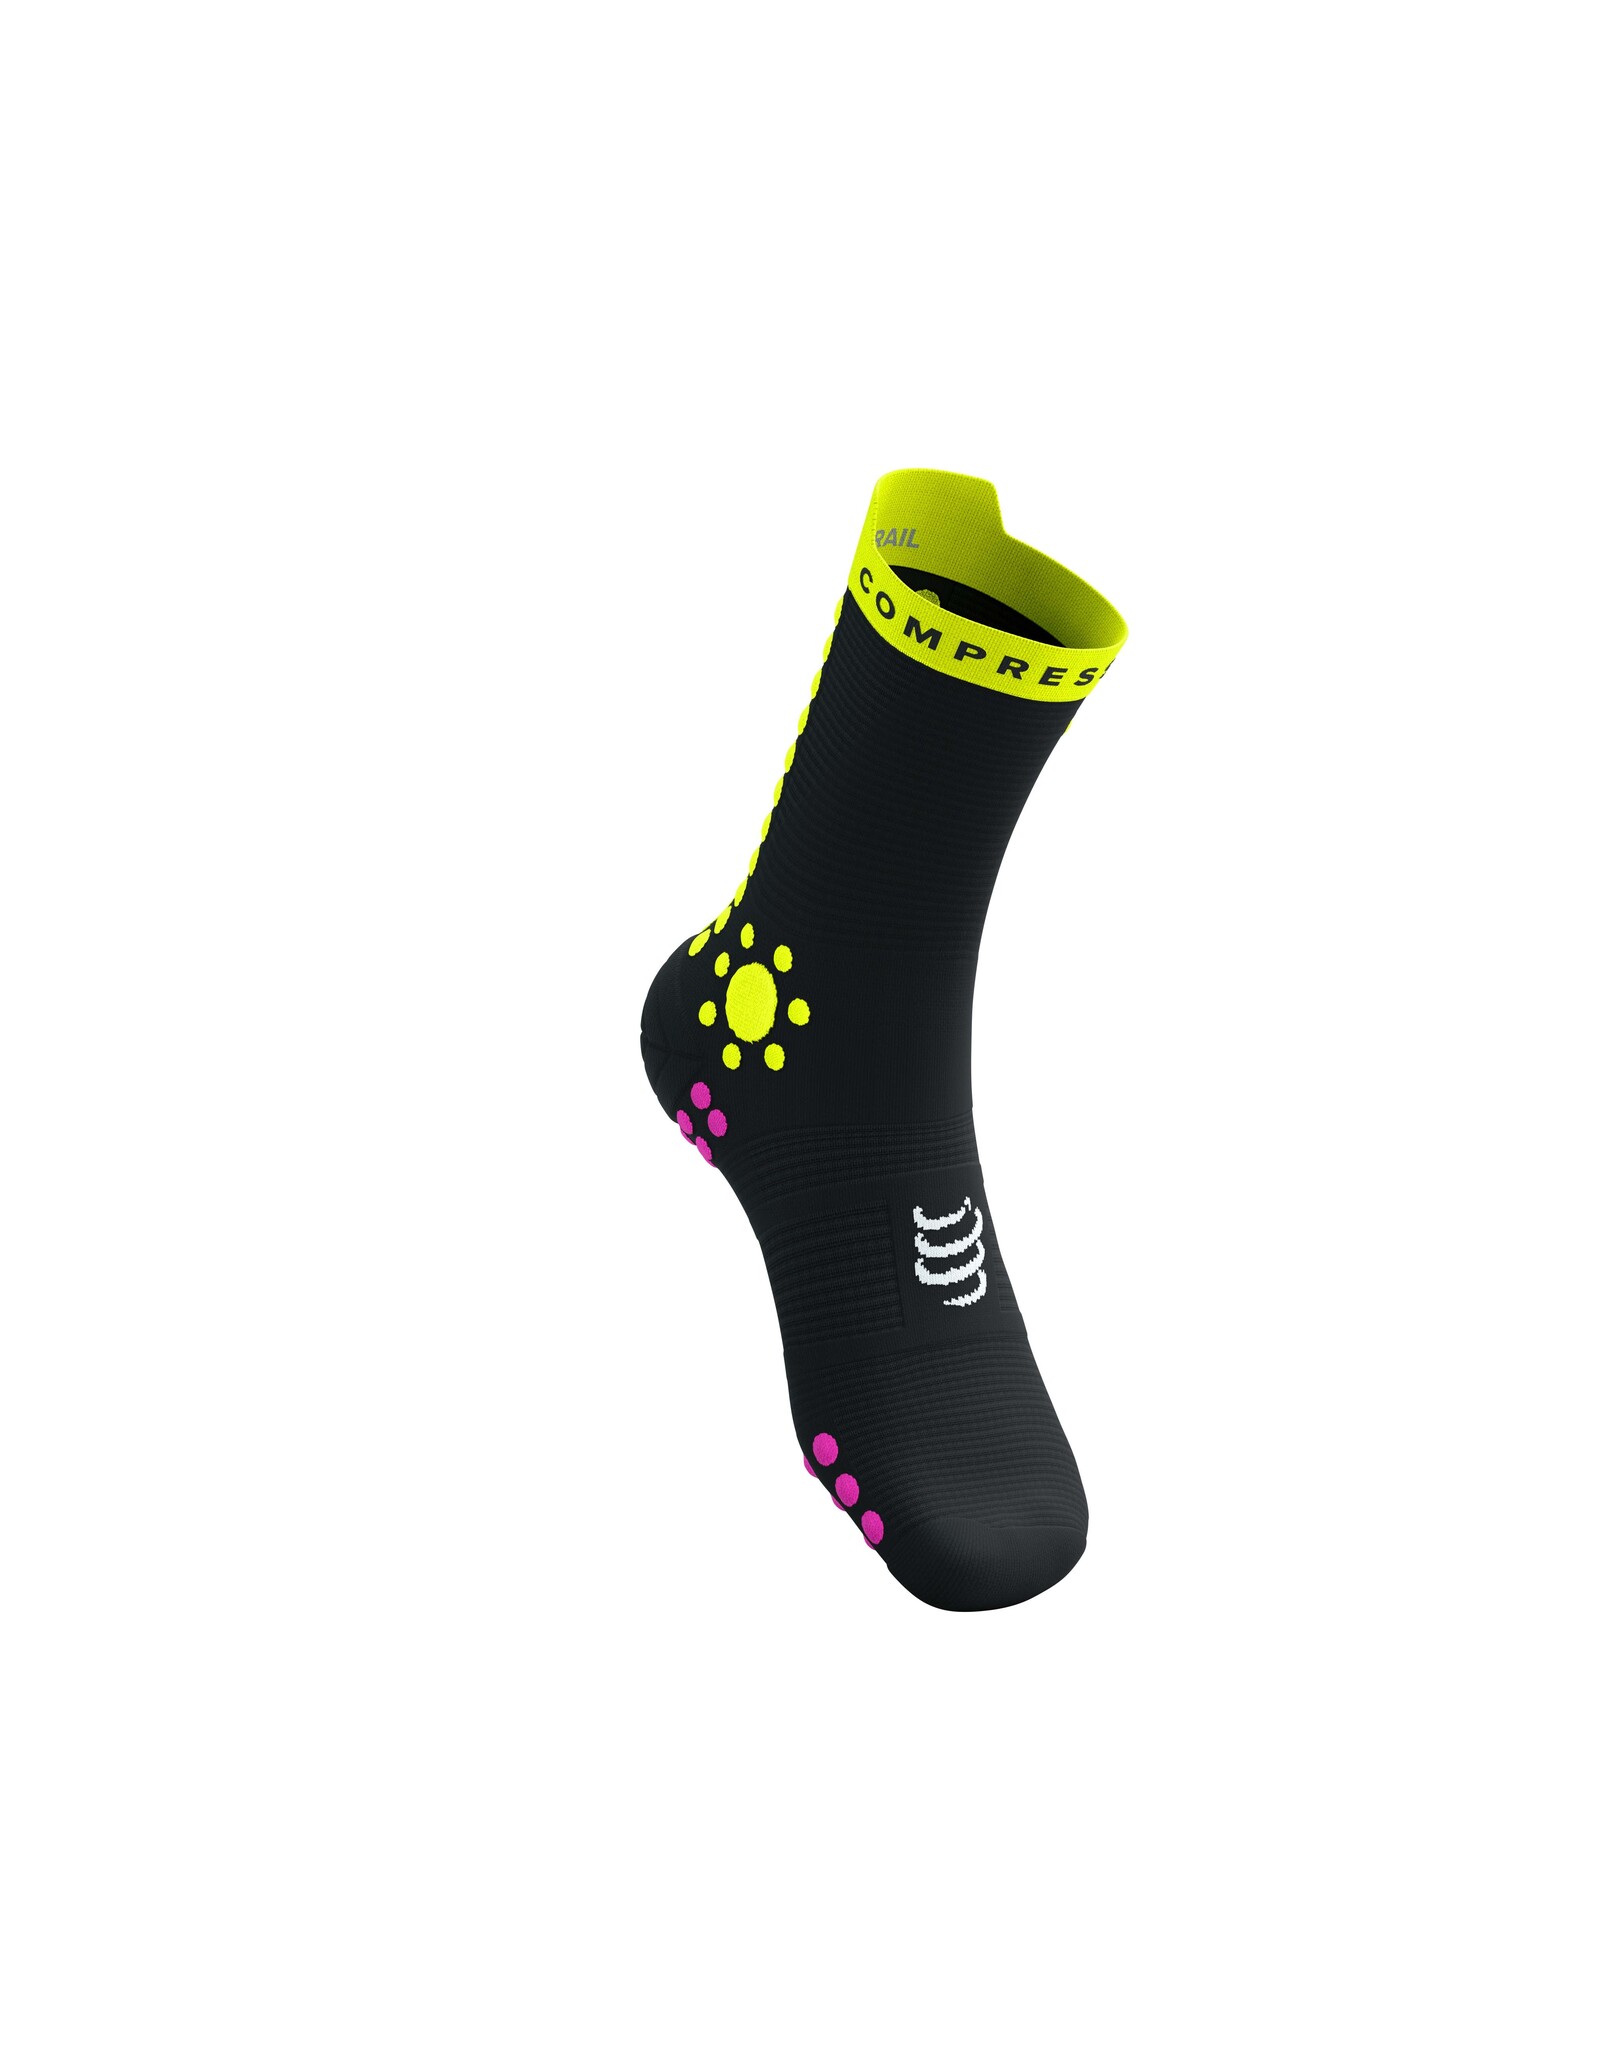 Compressport Pro Racing Socks v4.0 Trail - Black/Safety Yellow/Neon Pink